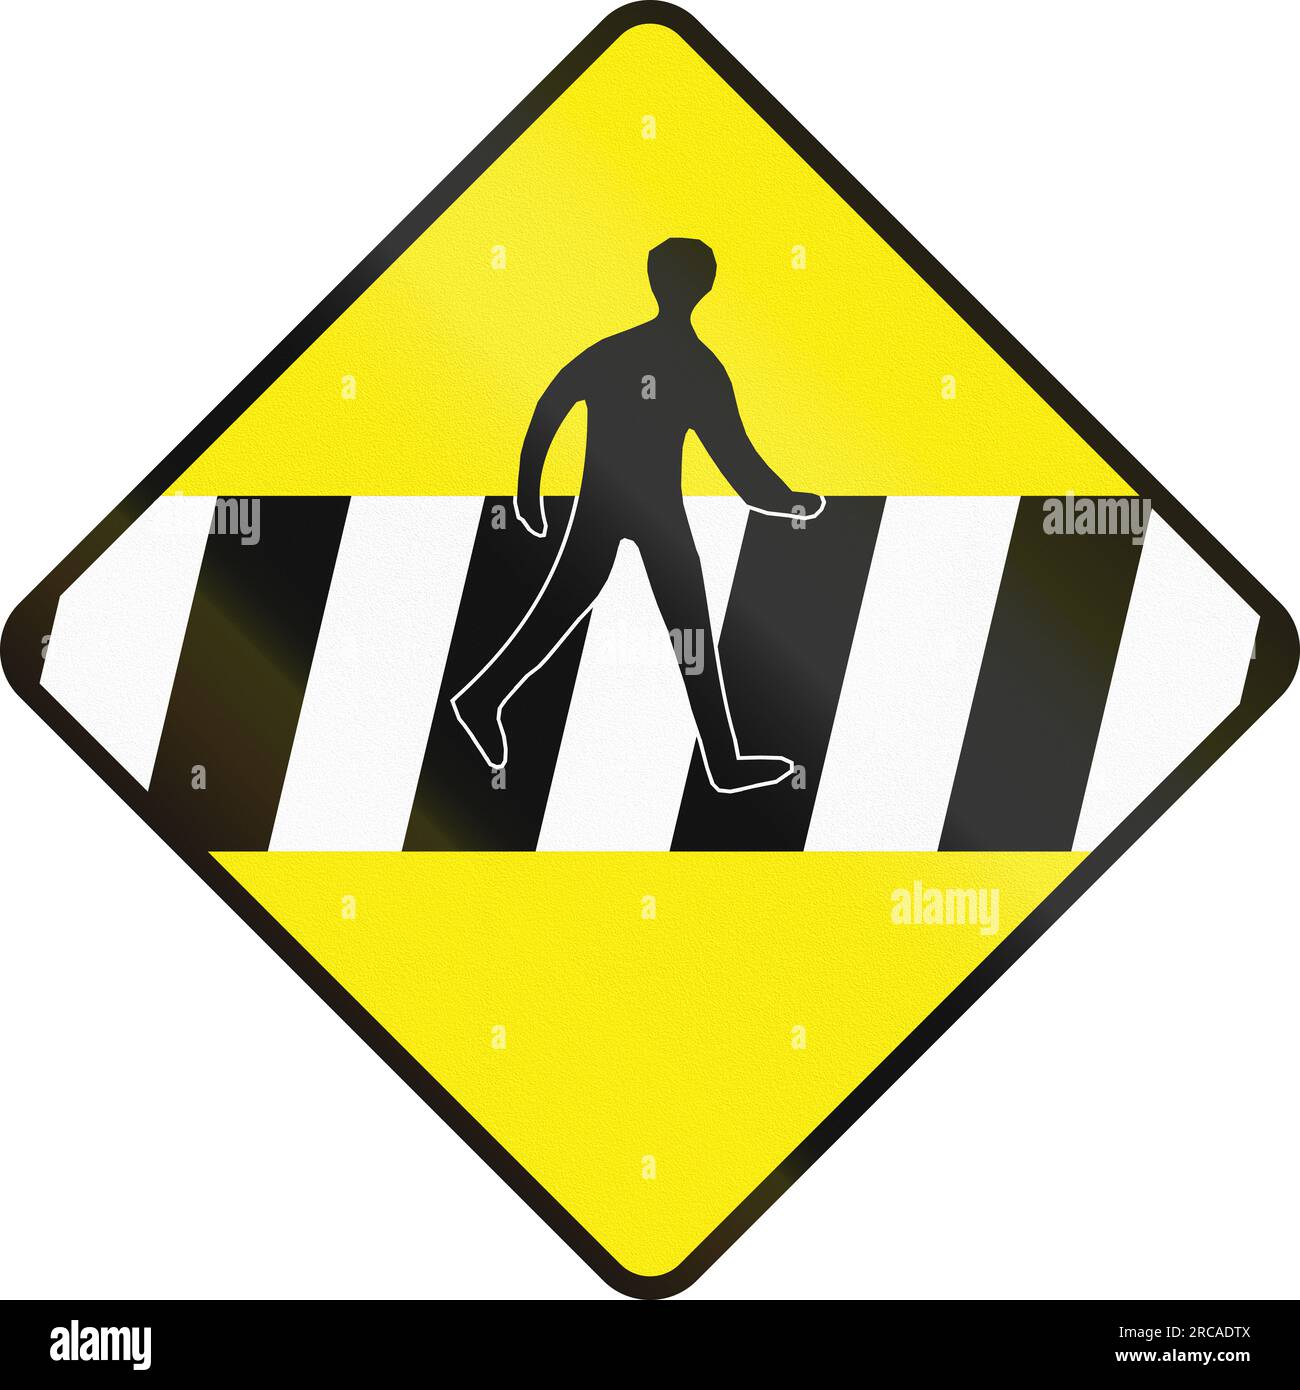 Irish road warning sign: Pedestrian crossing - Alternative version Stock Photo